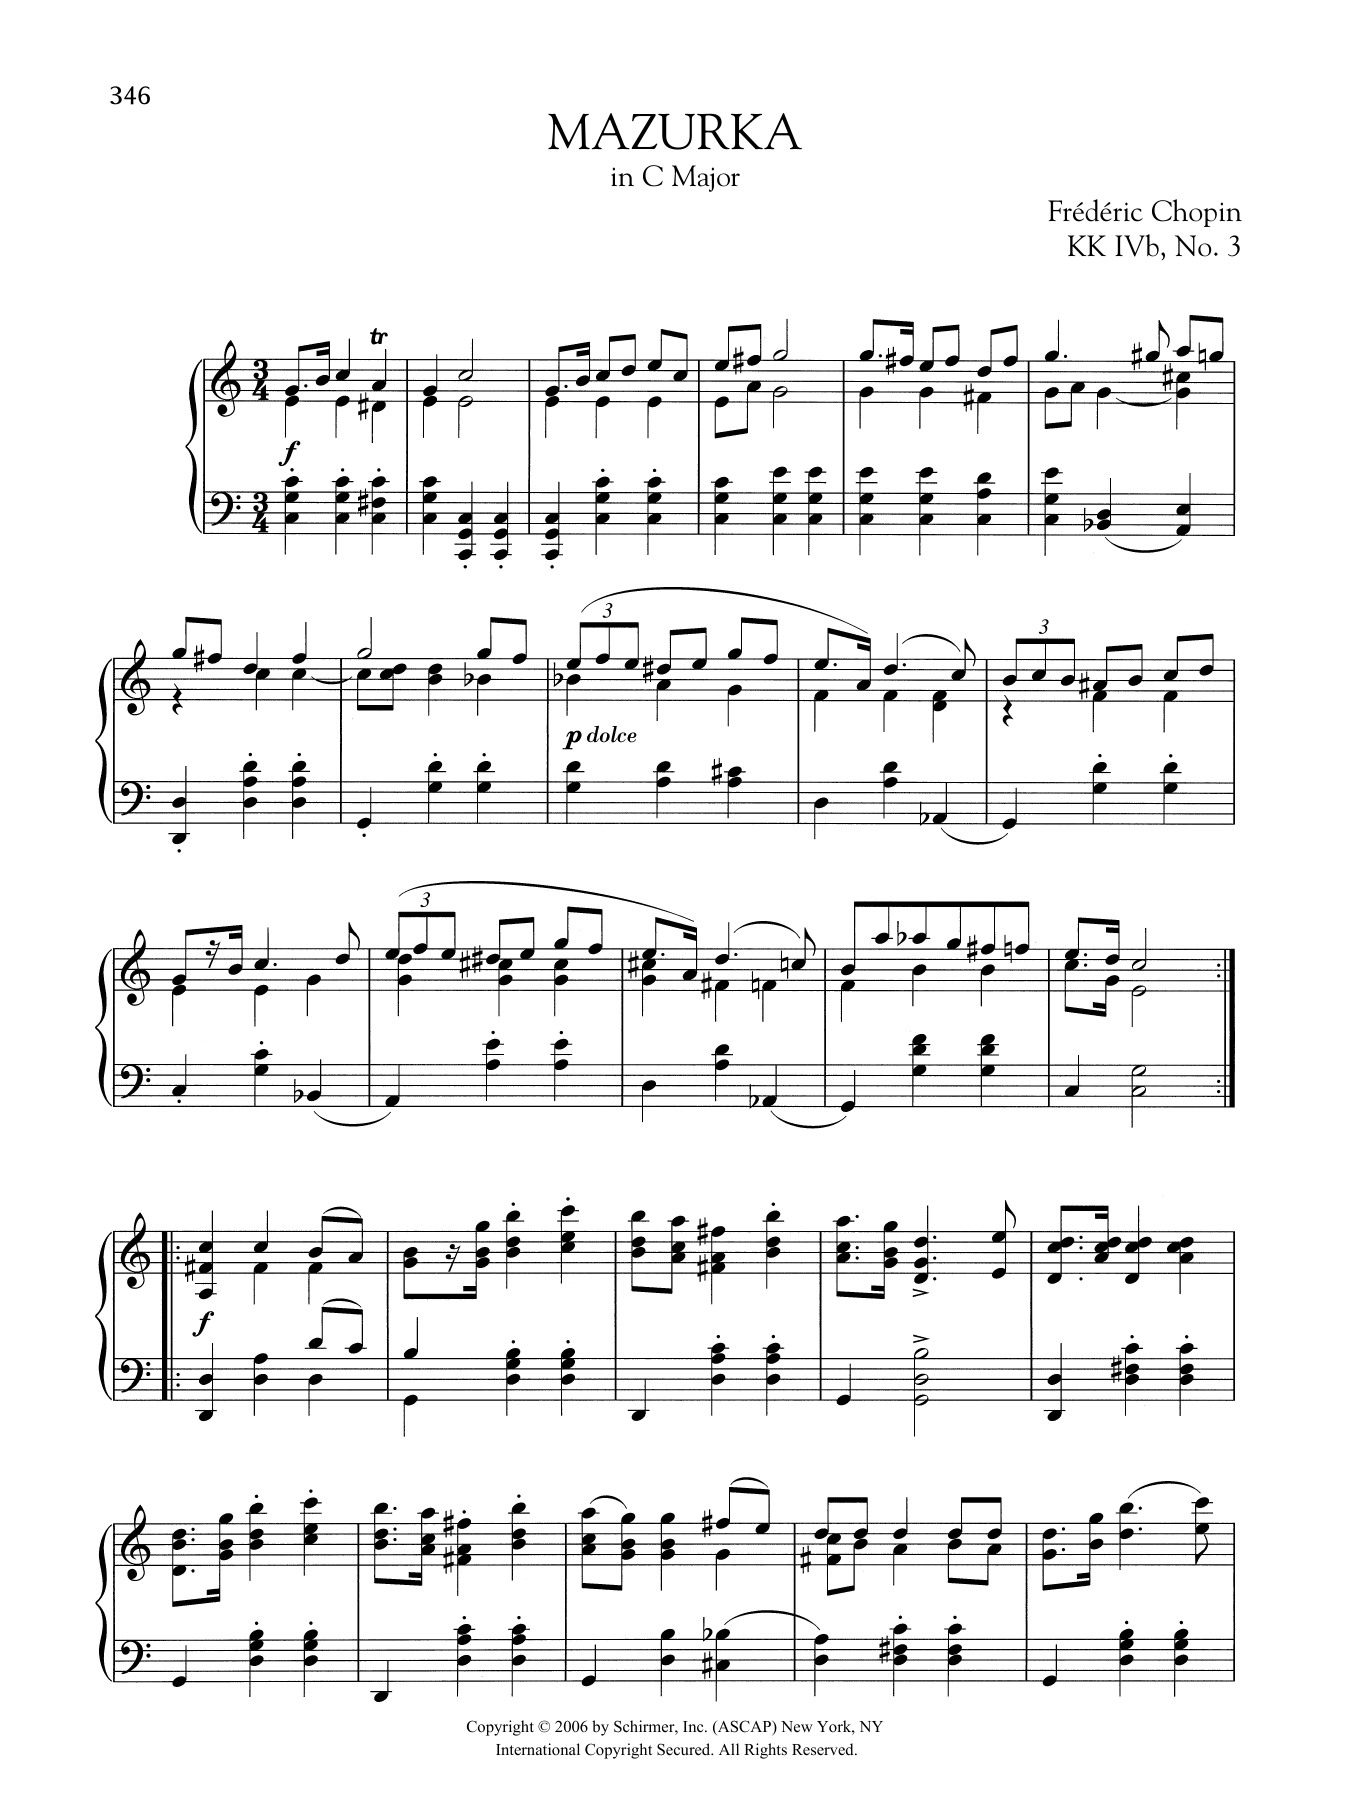 Download Frederic Chopin Mazurka in C Major, KK. IVb, No. 3 Sheet Music